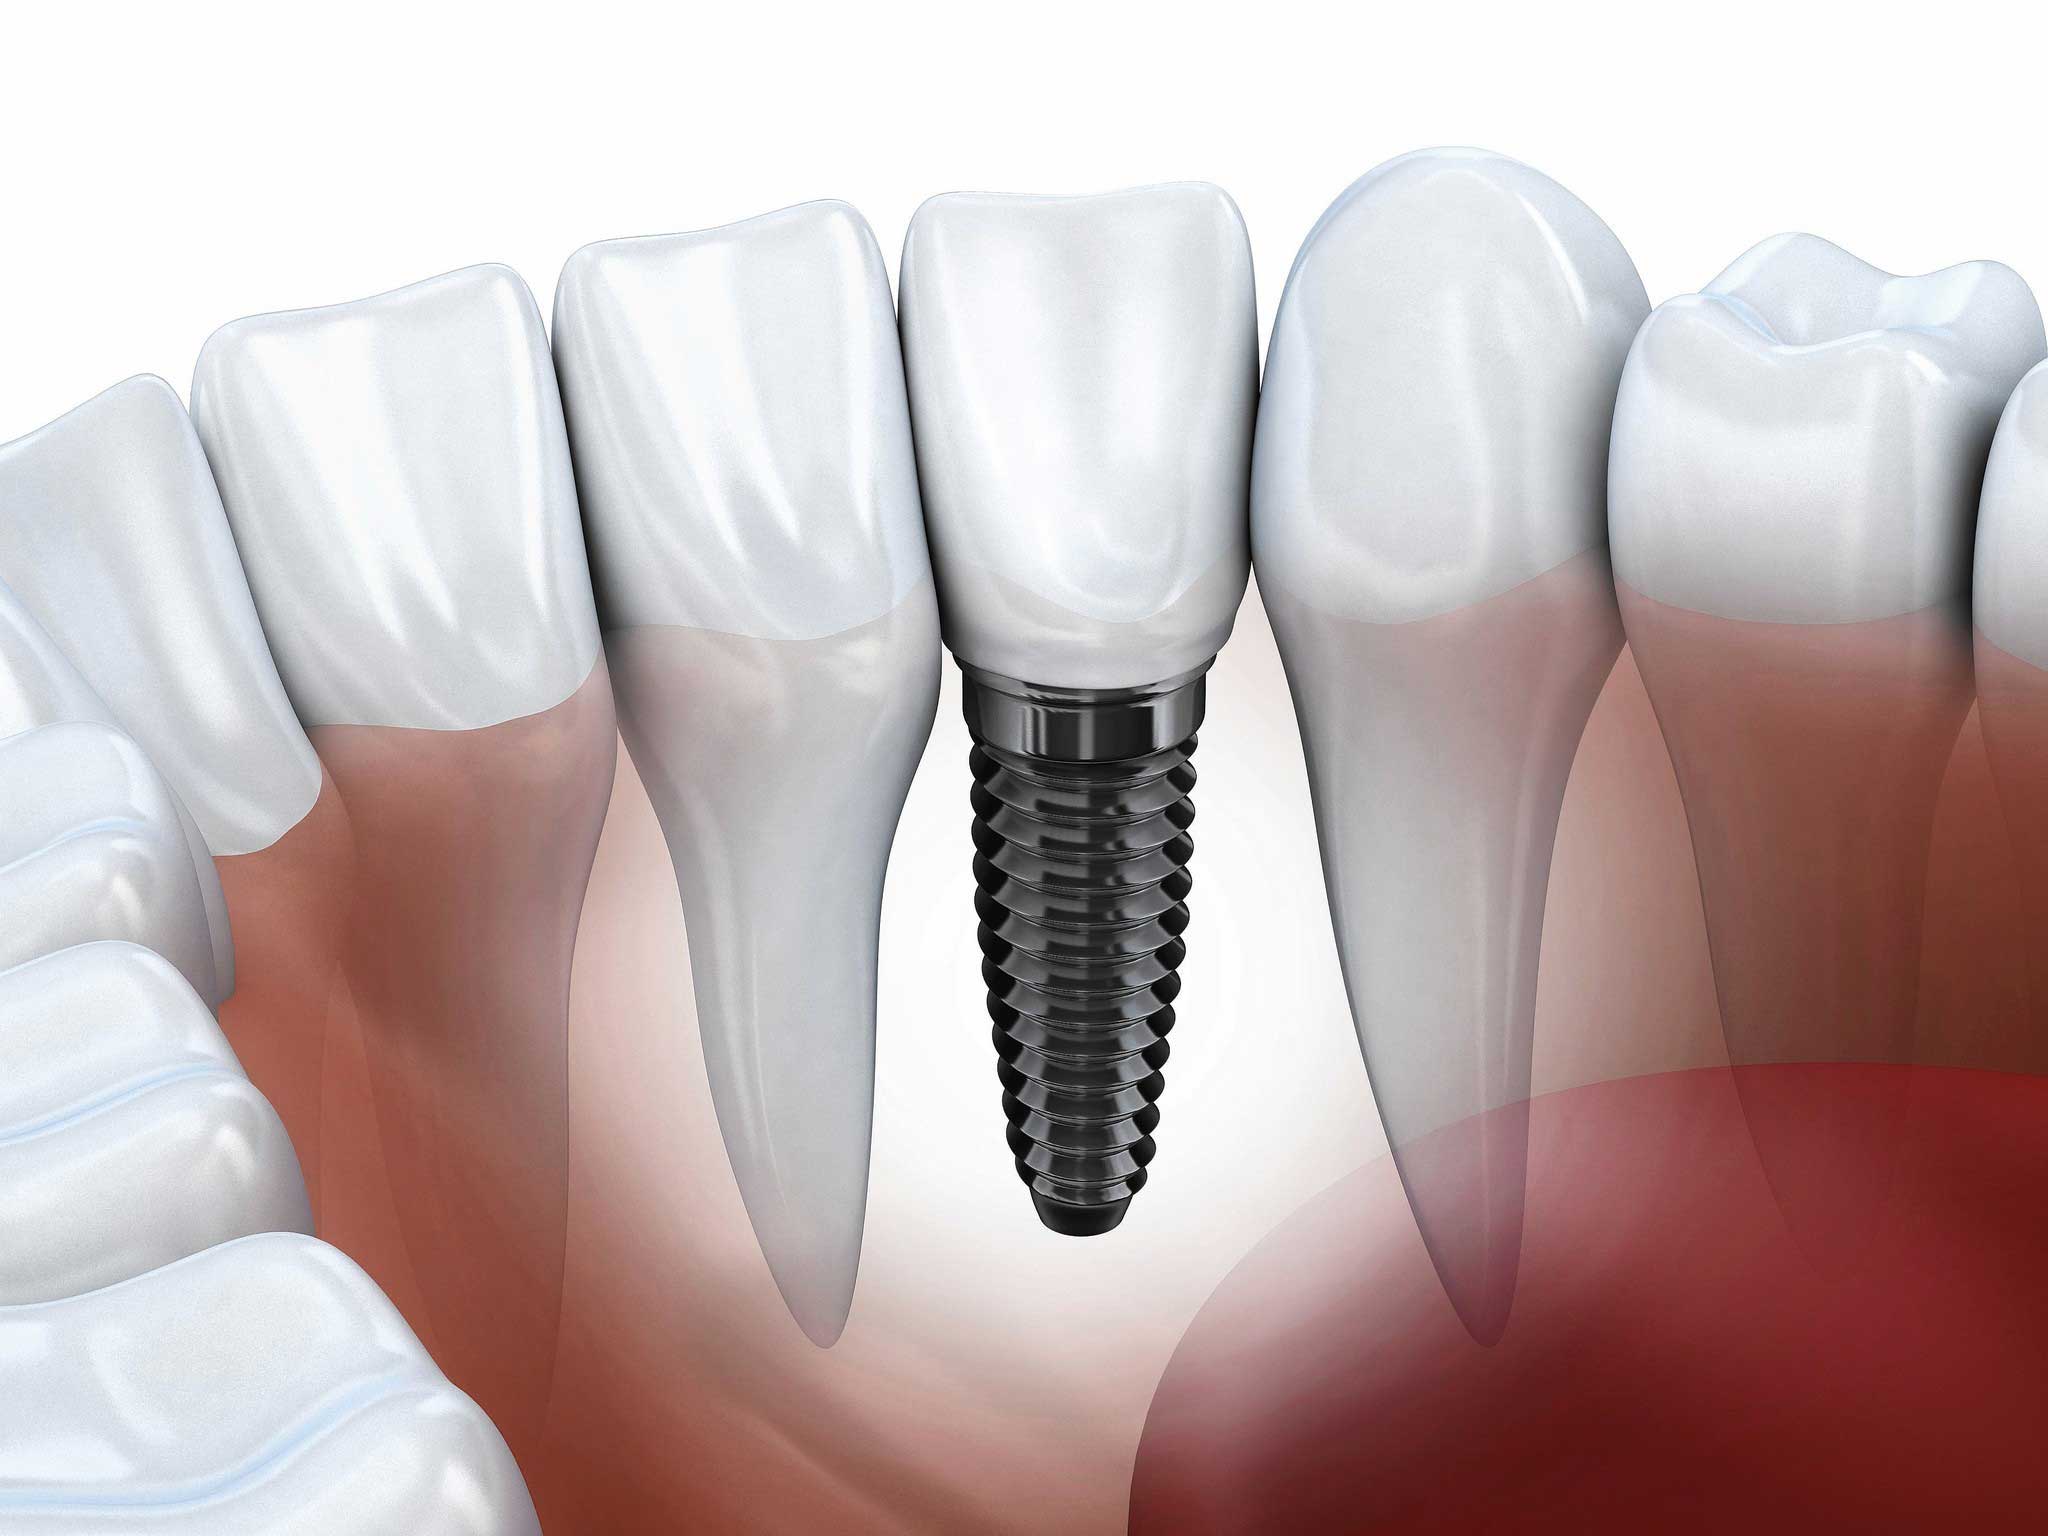 Dental-implants-1024x768@2x1